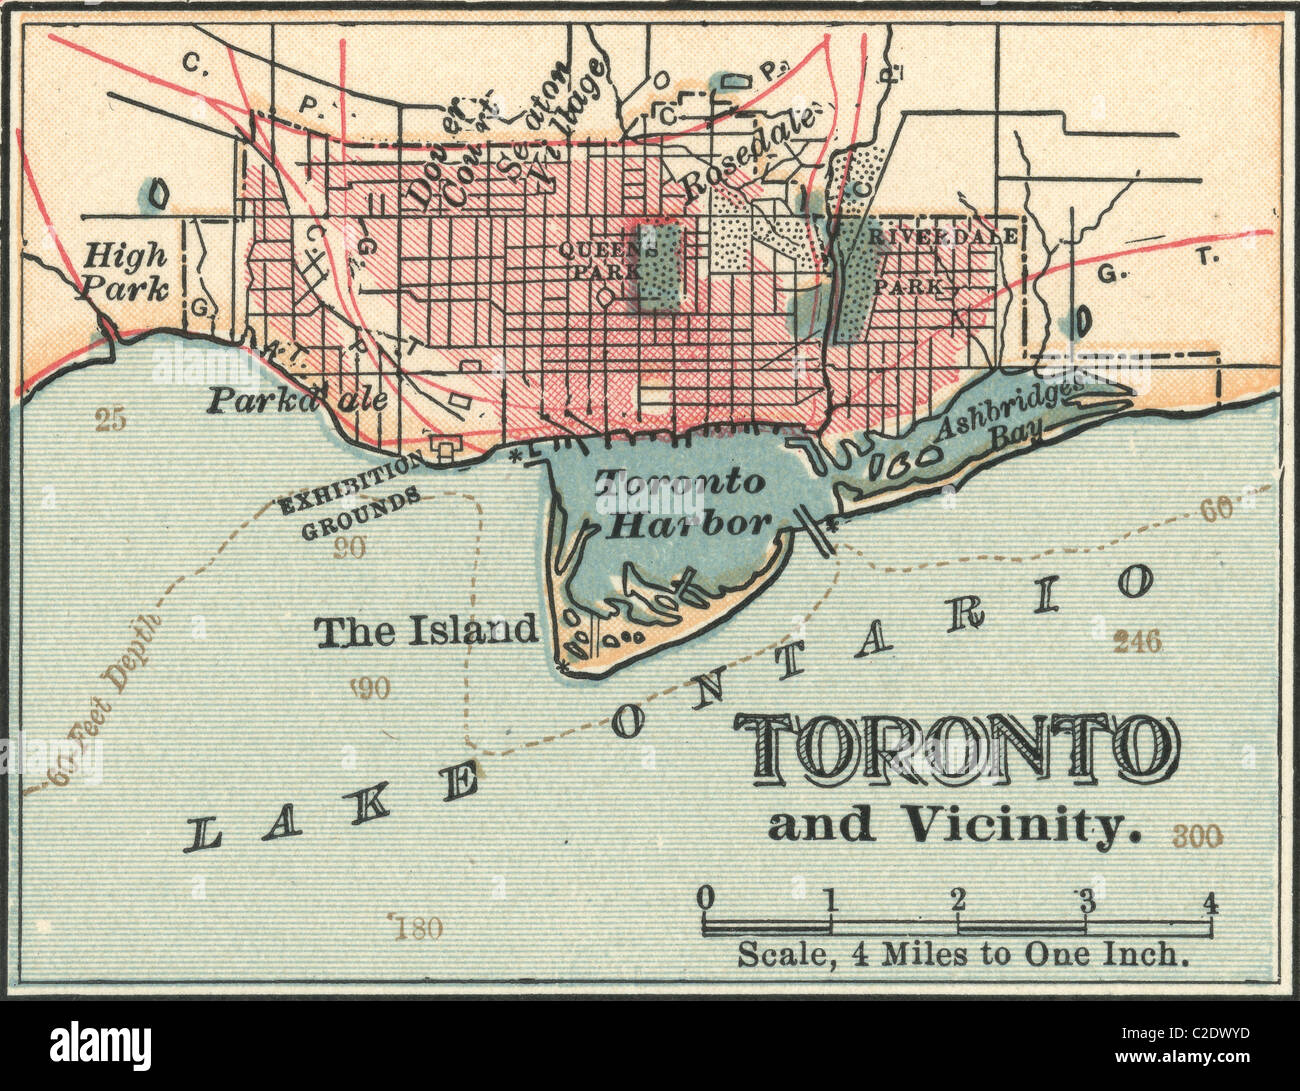 Mapa De Toronto C2dwyd 